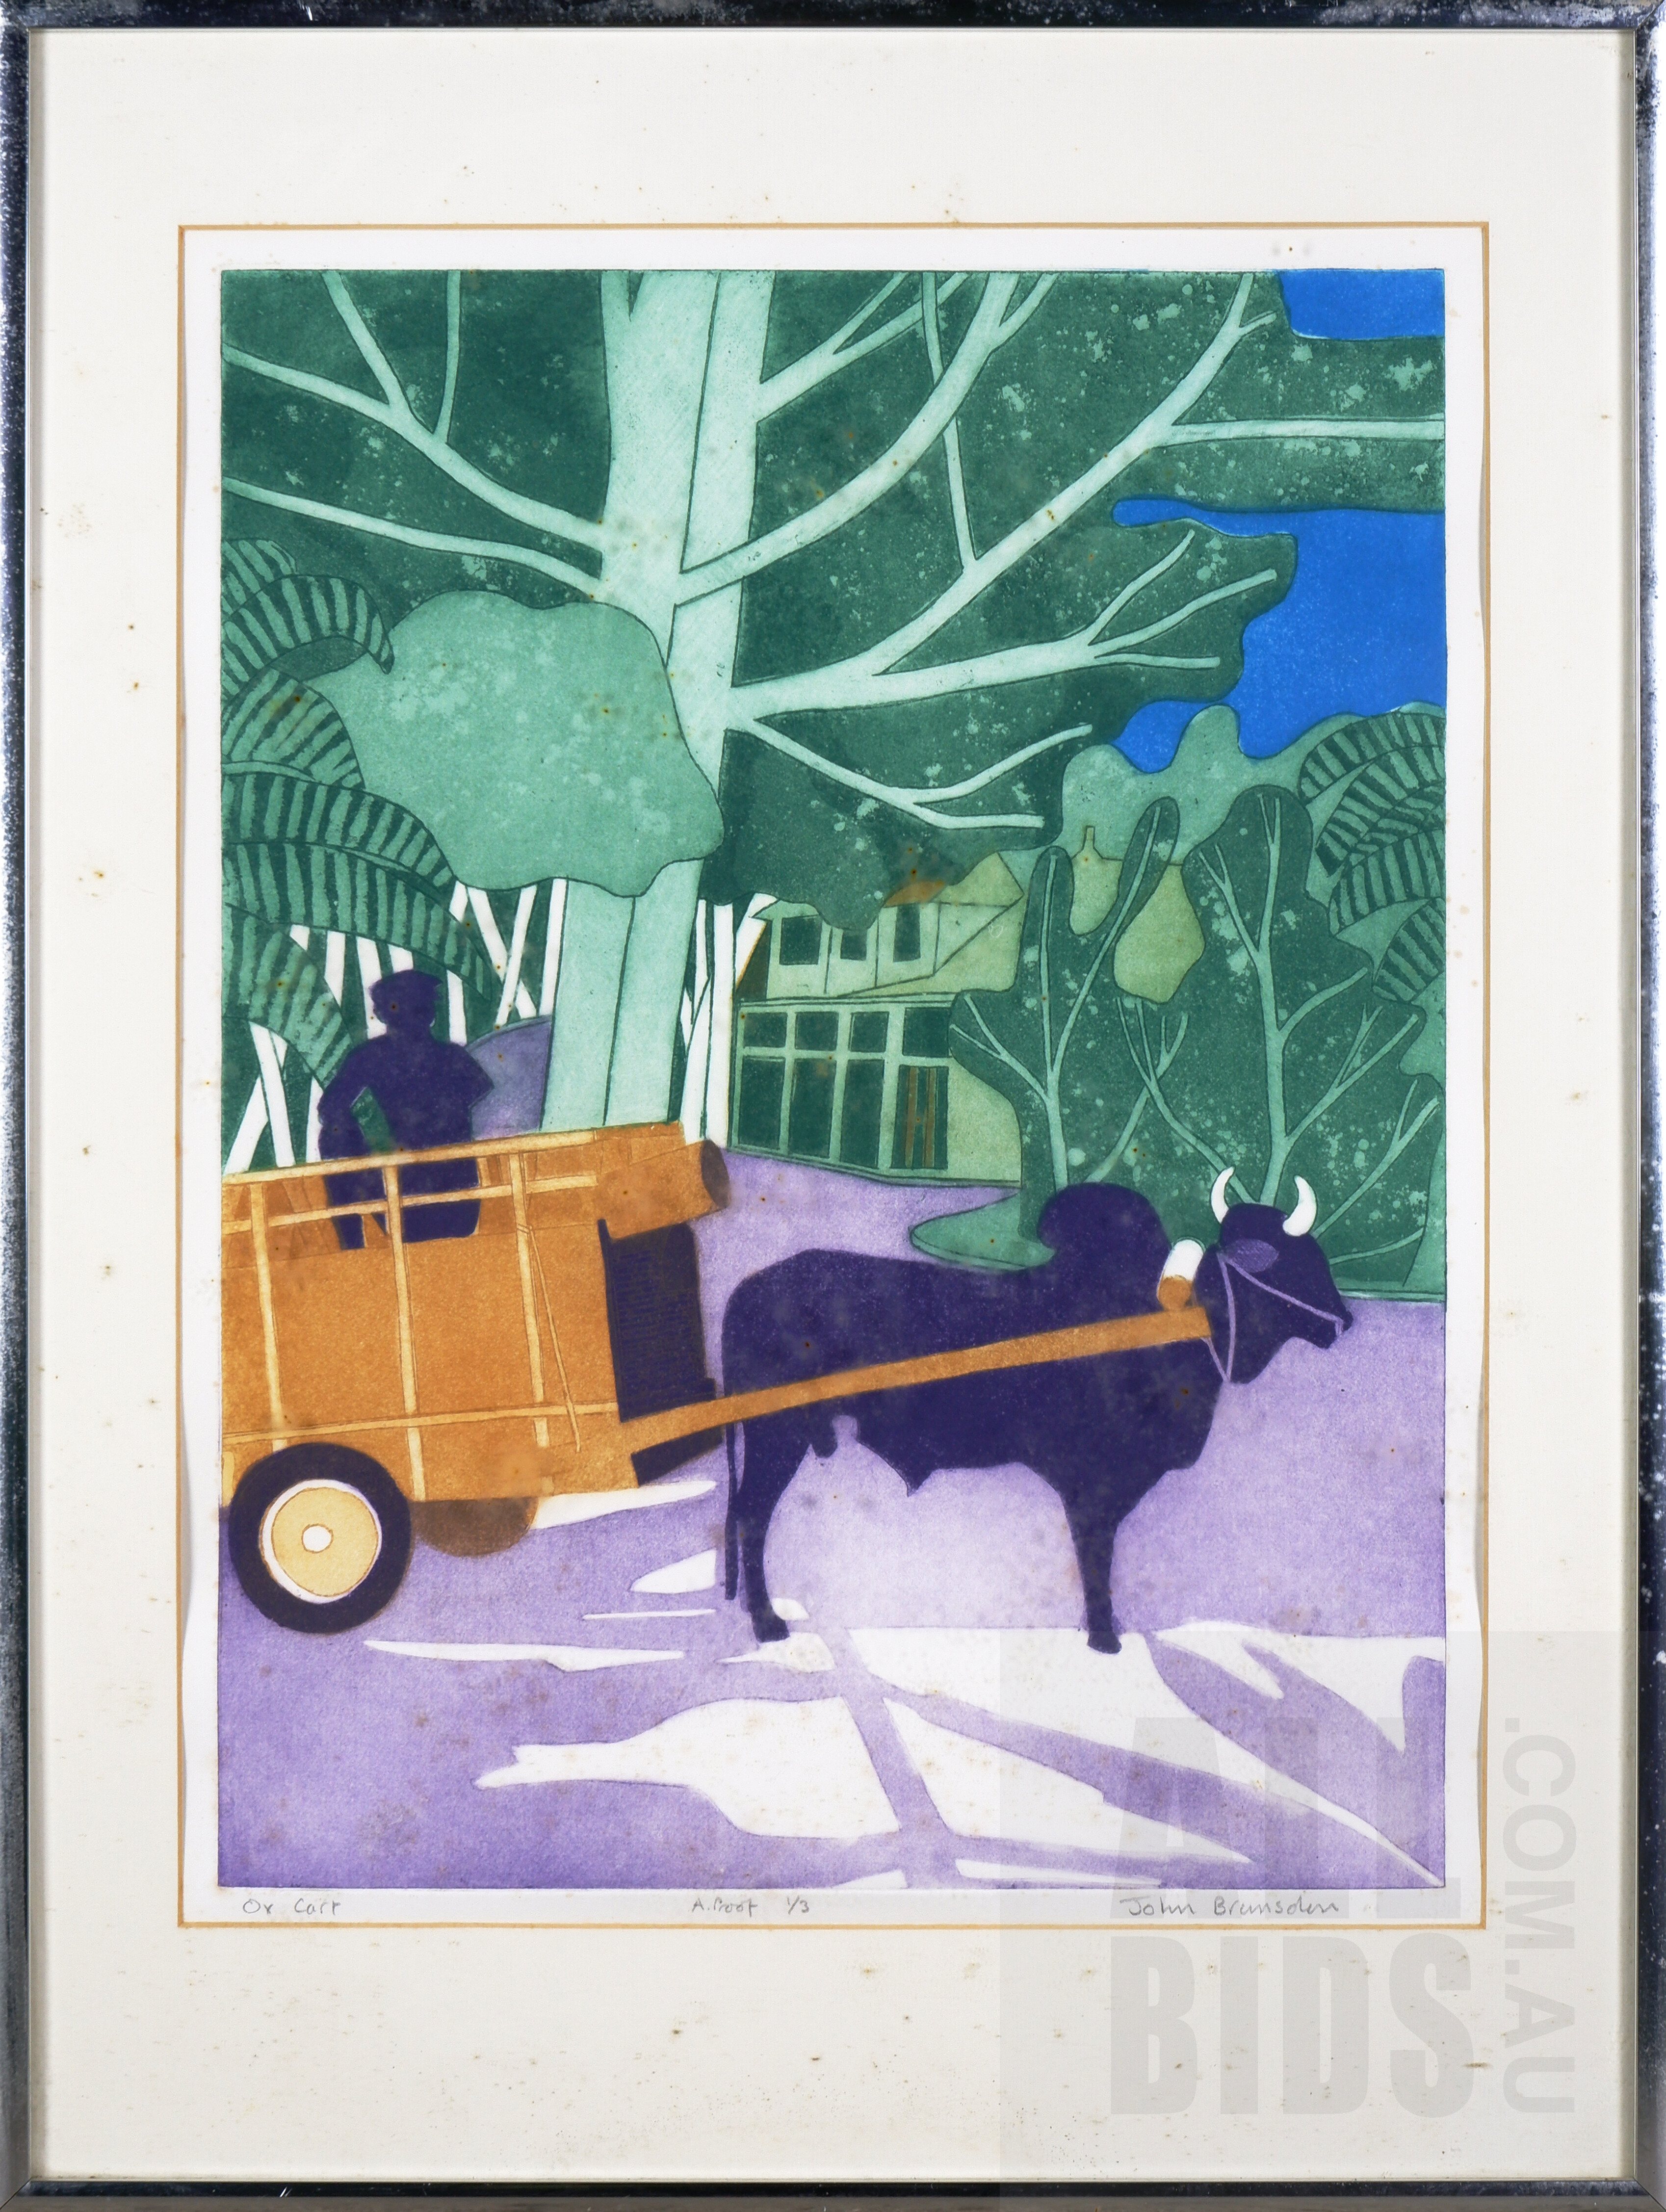 'John Brunsdon (1933-2014, British), Ox Cart, Etching and Aquatint, 60 x 45 cm (image size)'